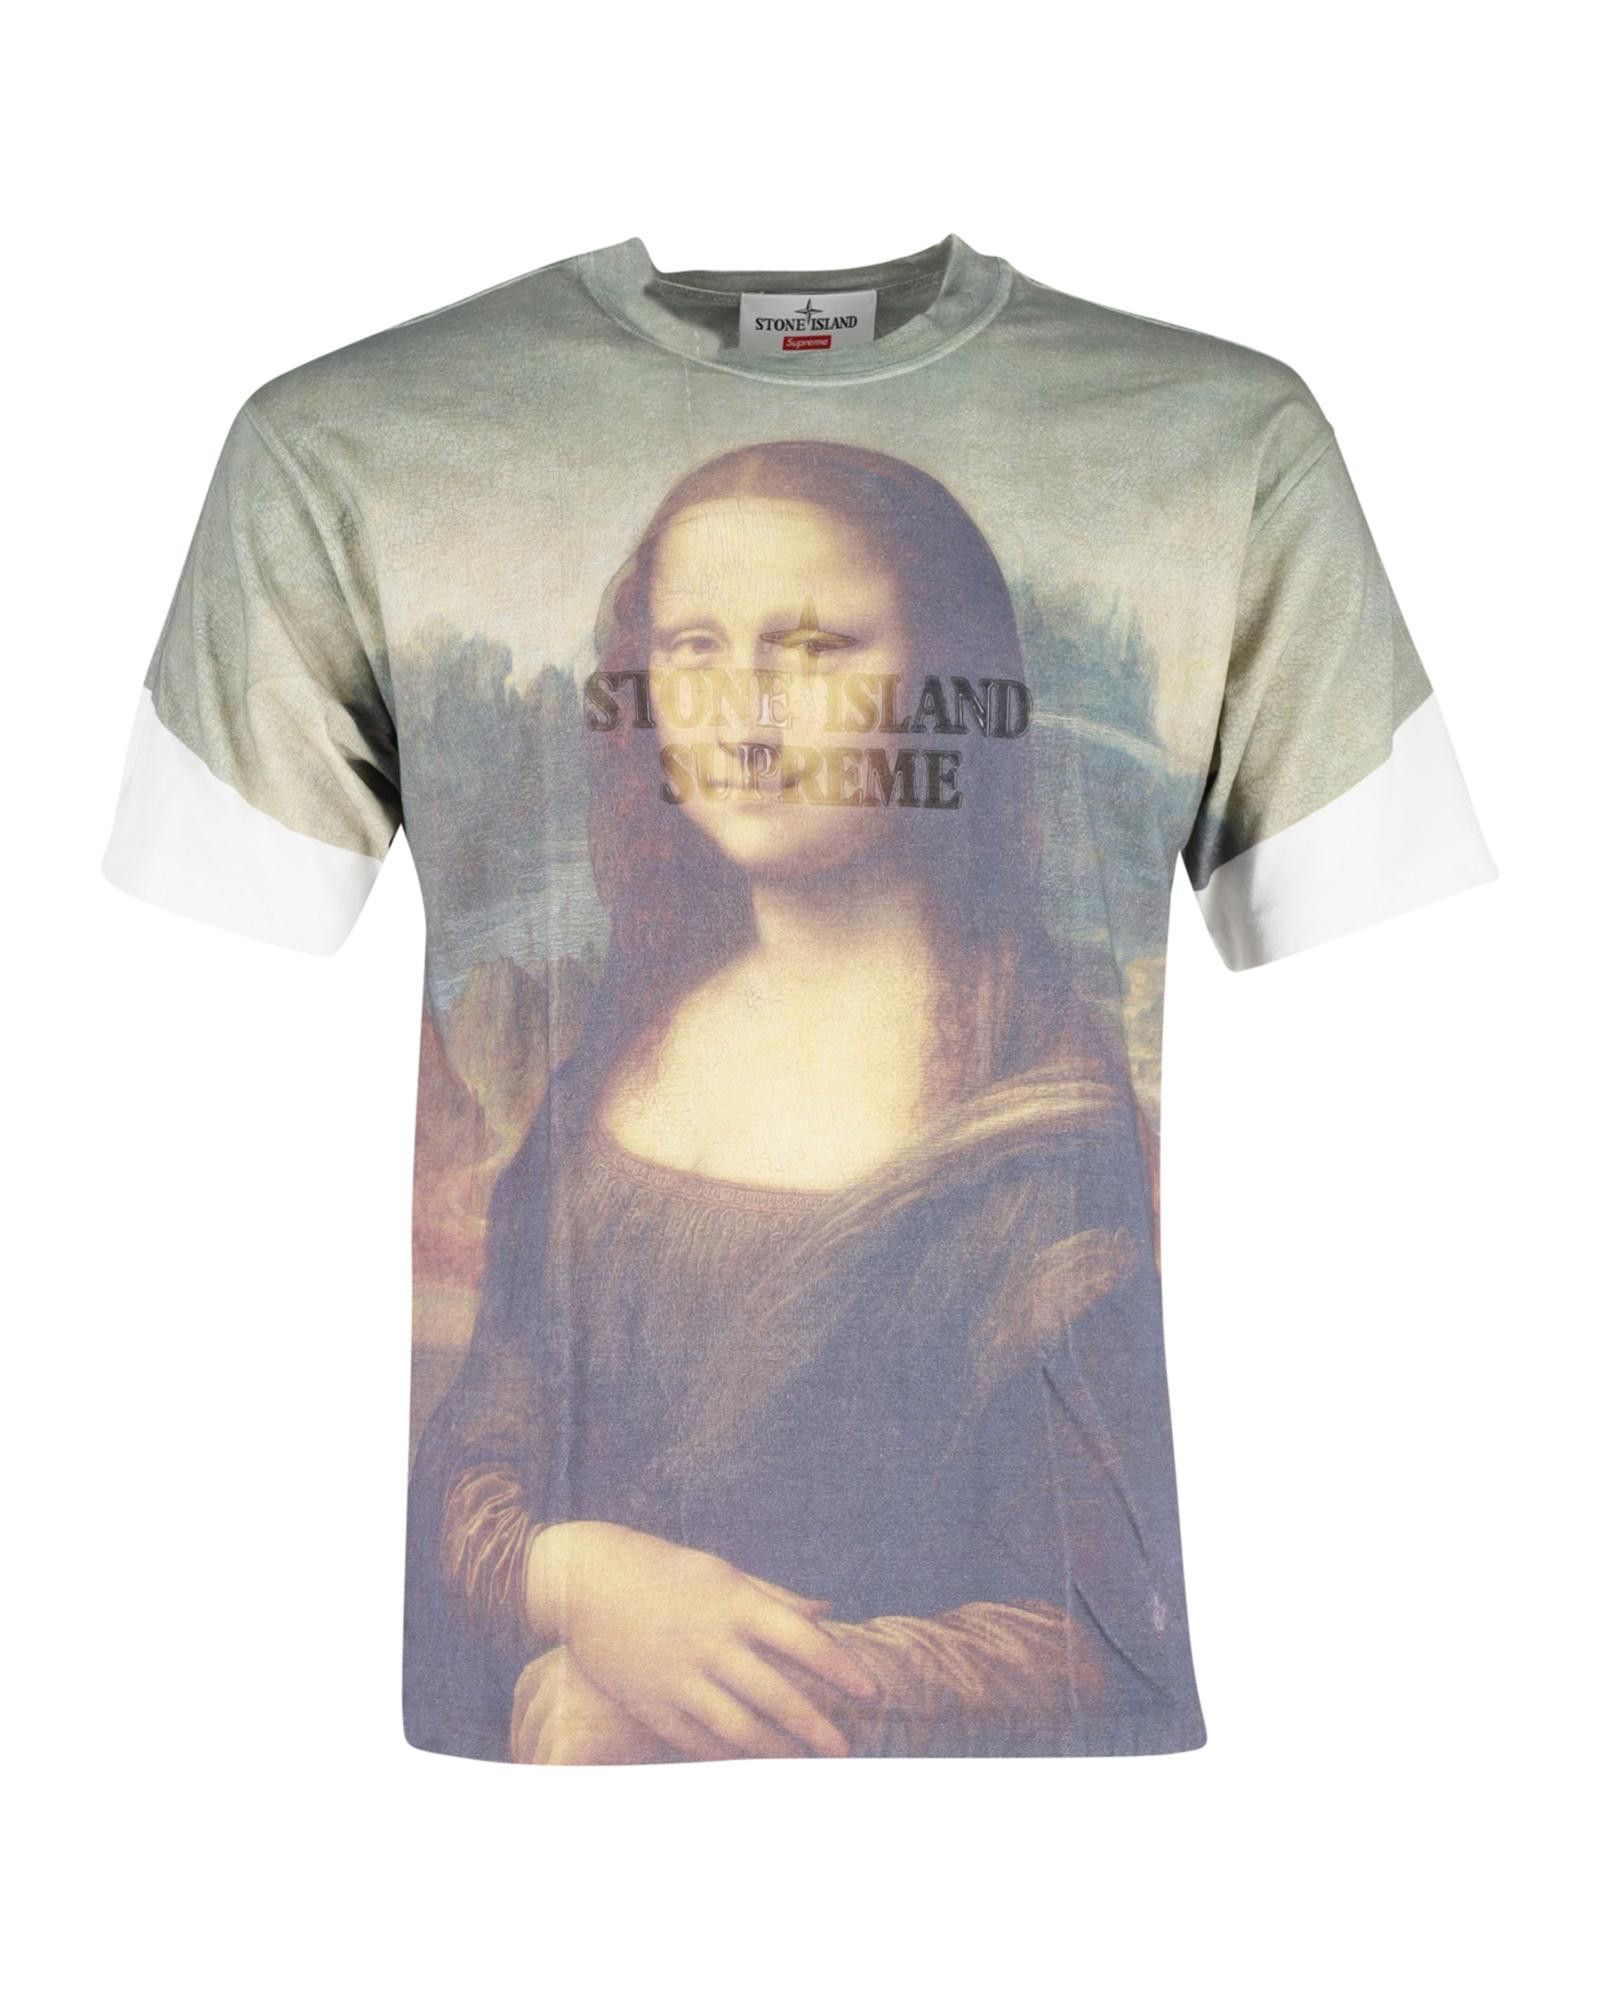 Stone Island Mona Lisa Print Cotton T-Shirt by Supreme x Stone Island |  Grailed